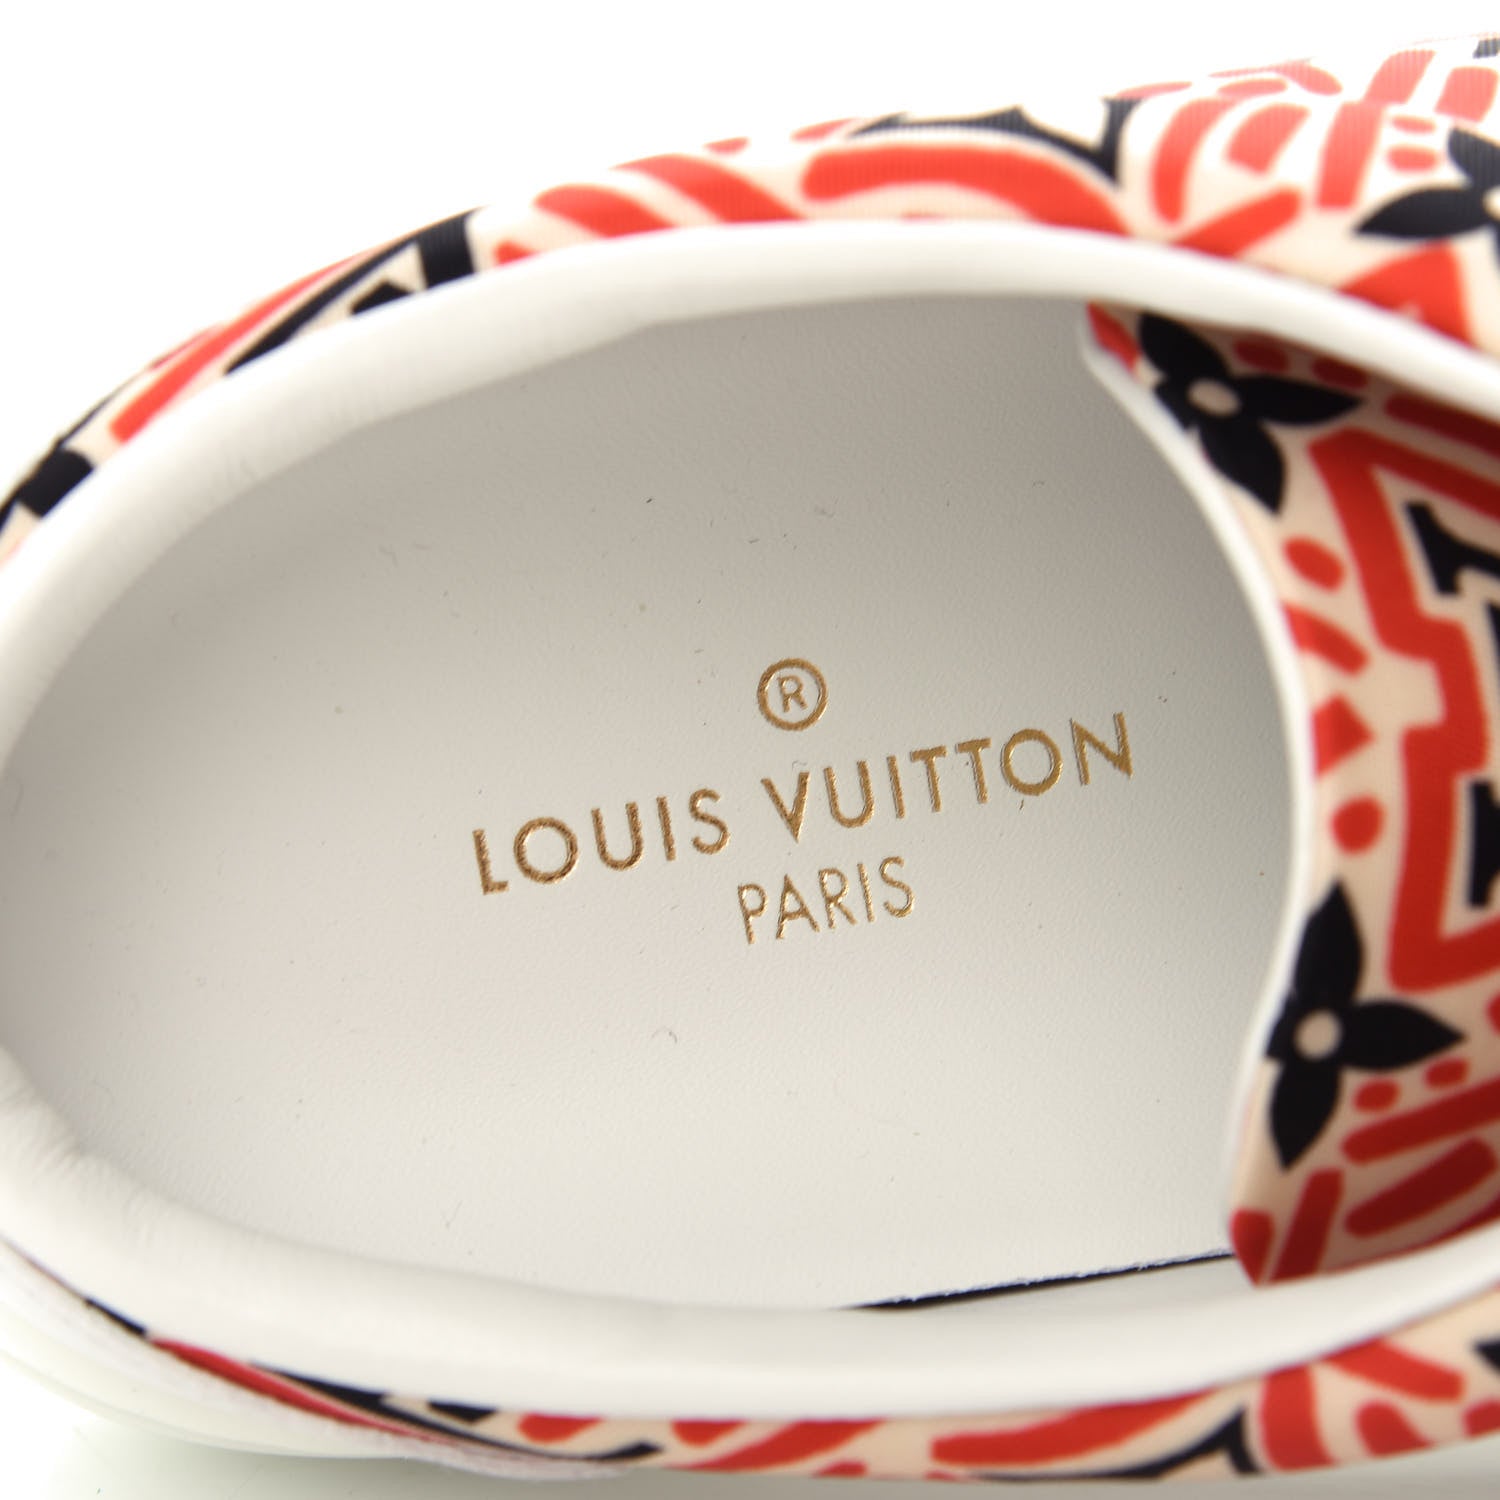 Vans x Louis Vuitton x Supreme : r/Sneakers